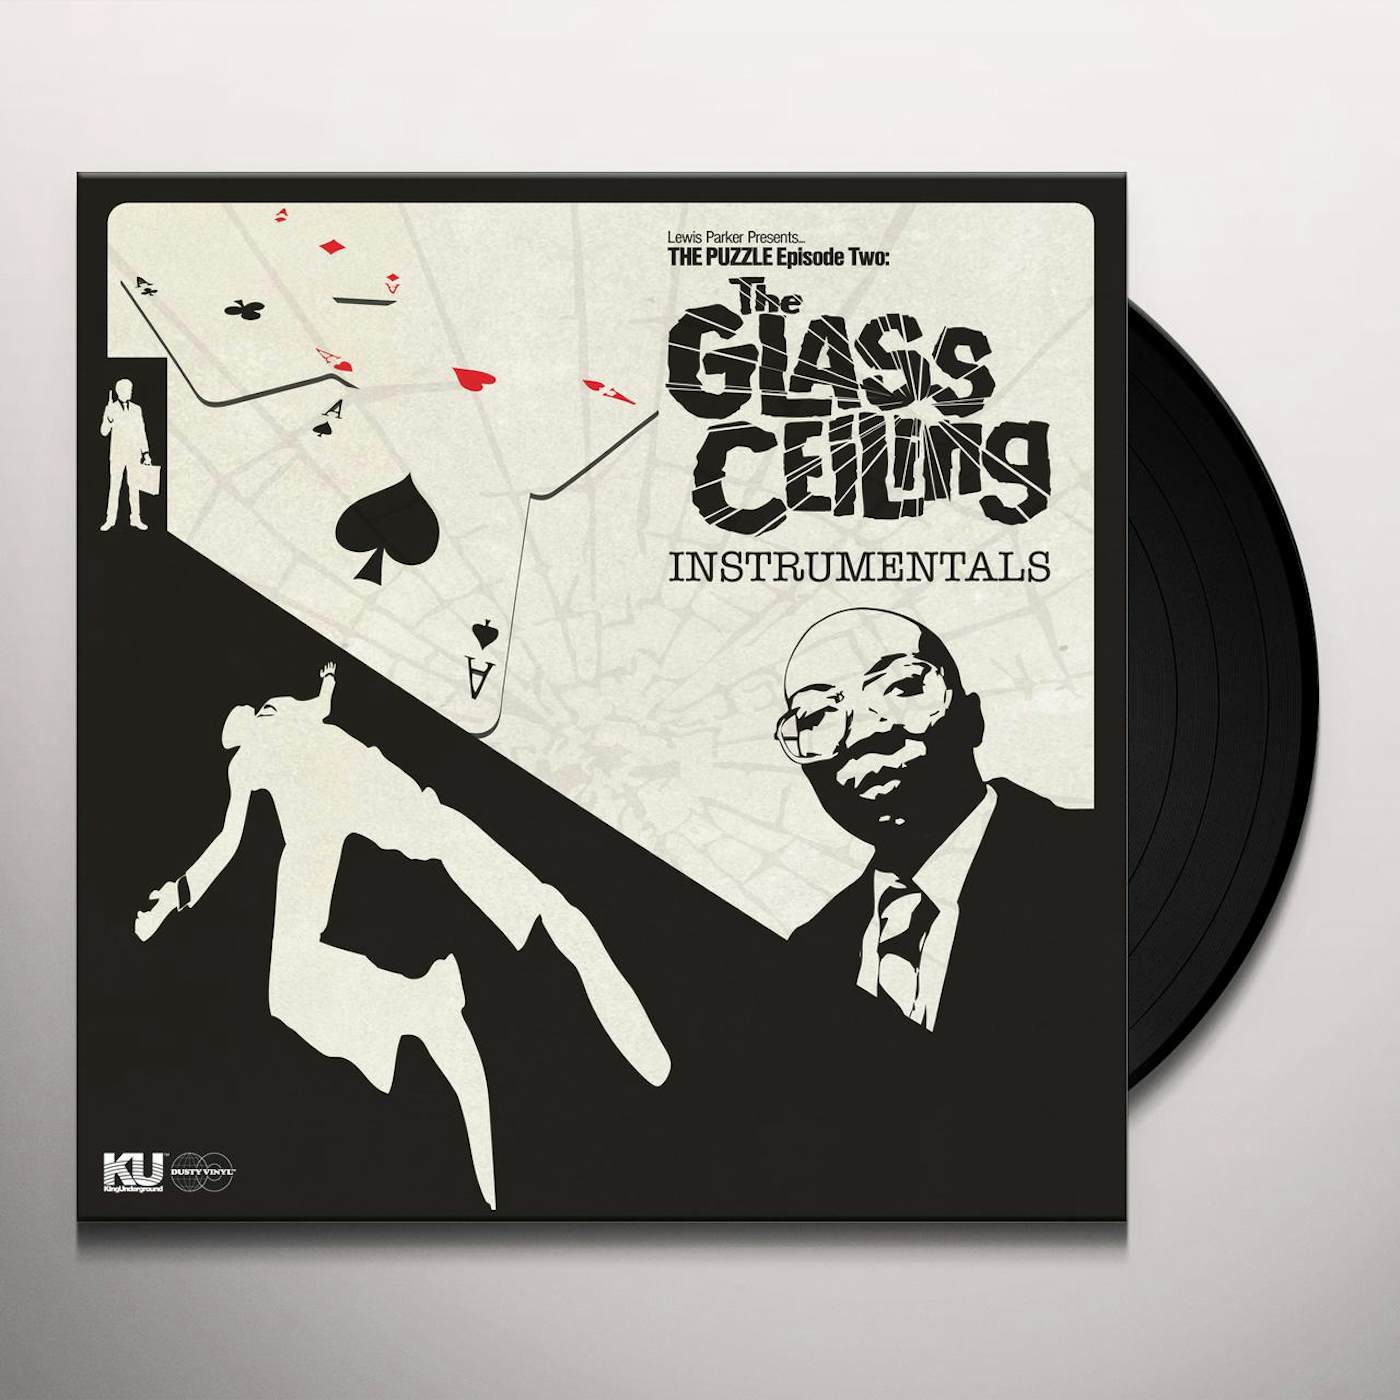 Lewis Parker PUZZLE EPISODE 2: THE GLASS CEILING INSTRUMENTALS Vinyl Record